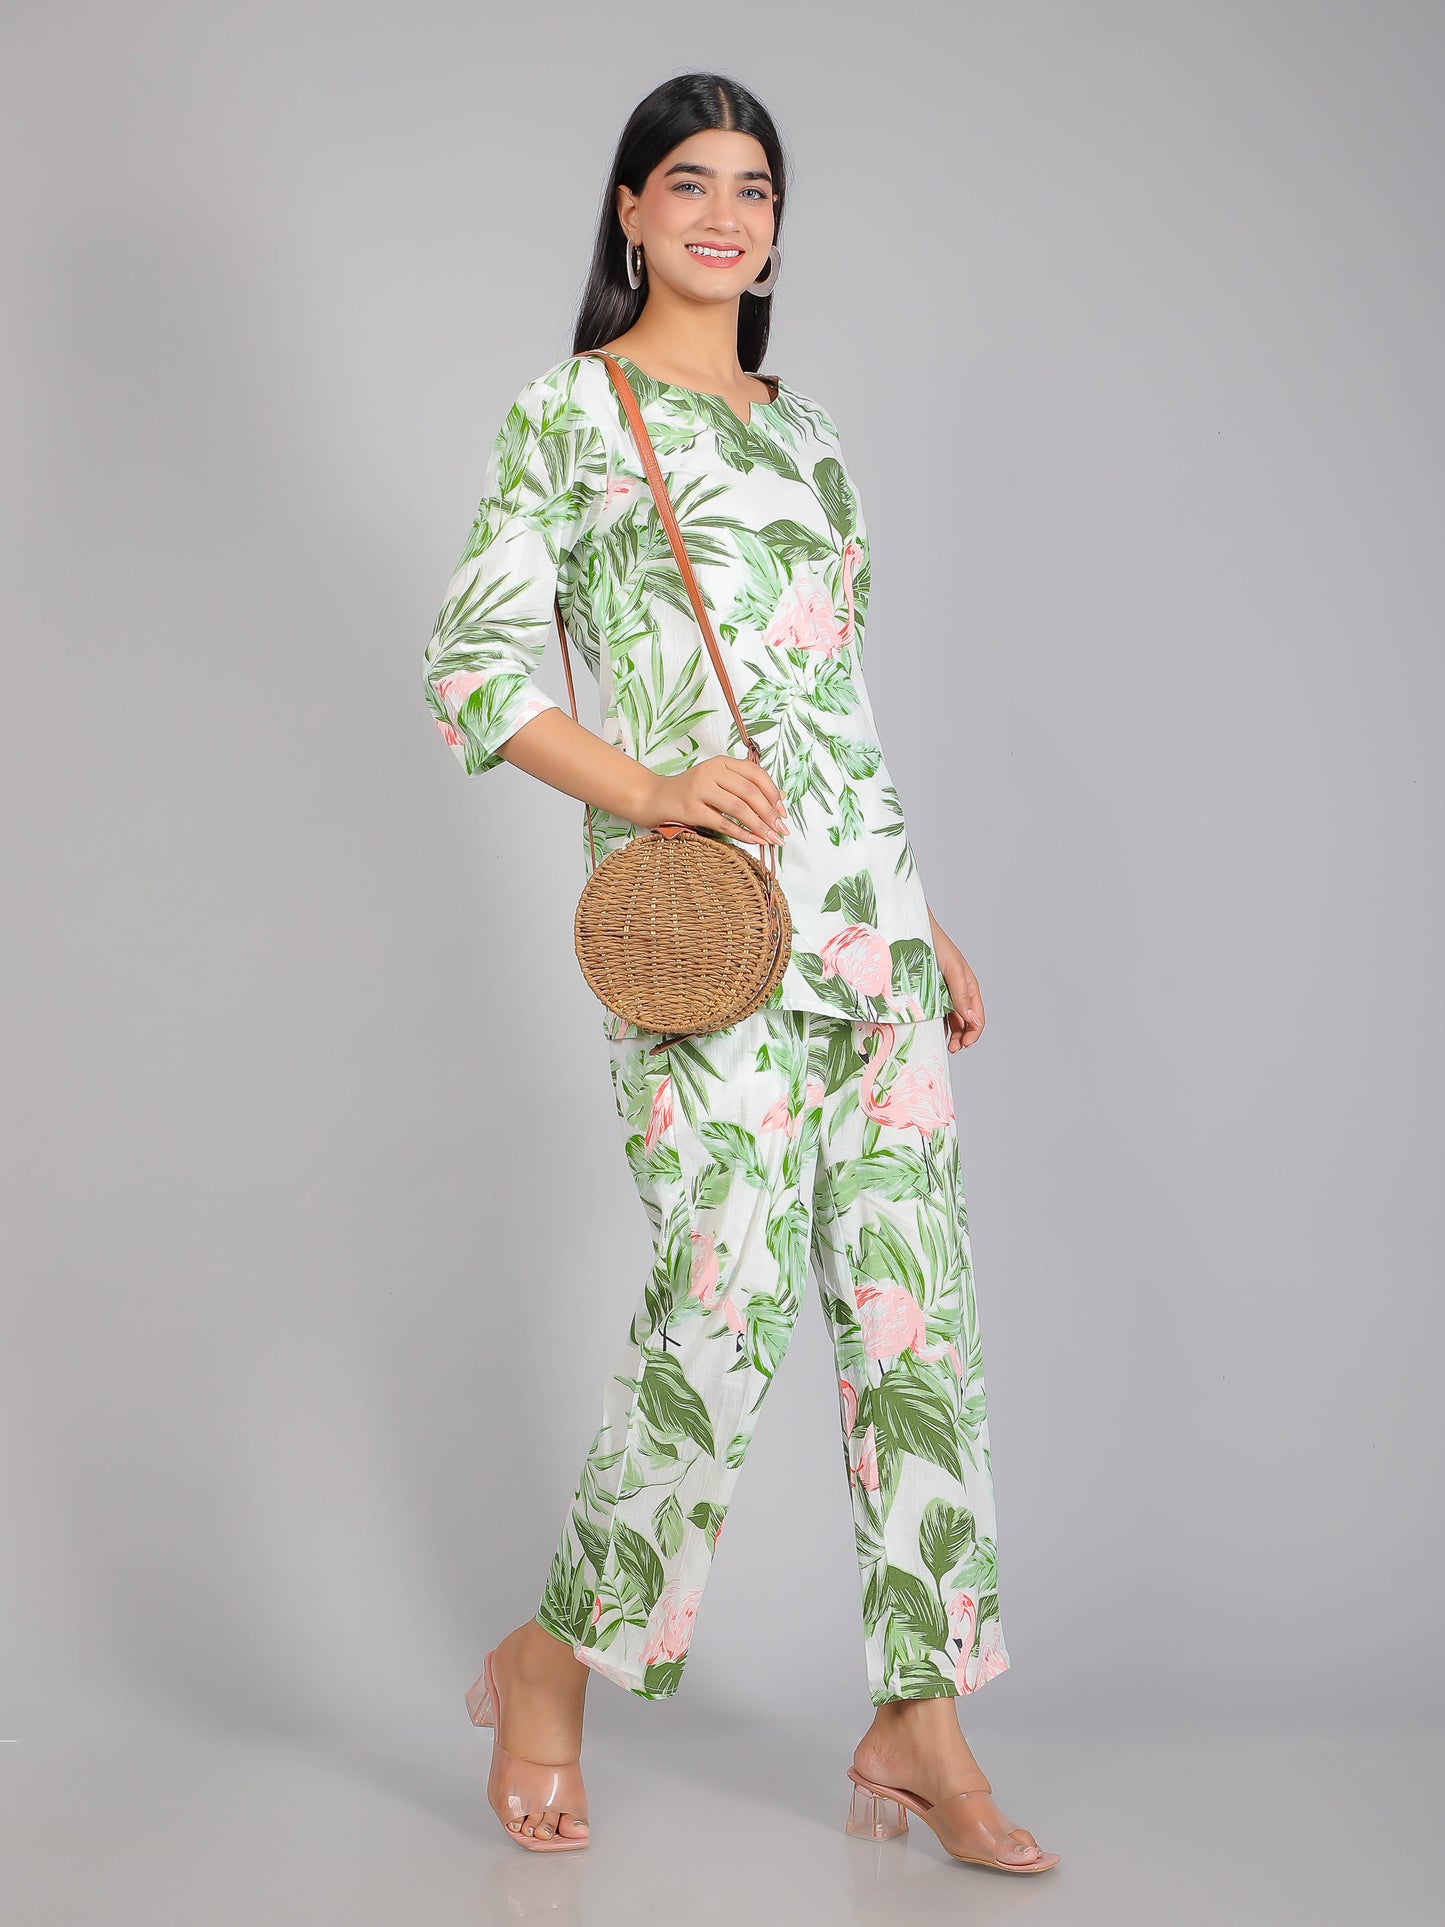 Green Tropical Floral & Flamingo Motifs on White Cotton Lounge Set for Women